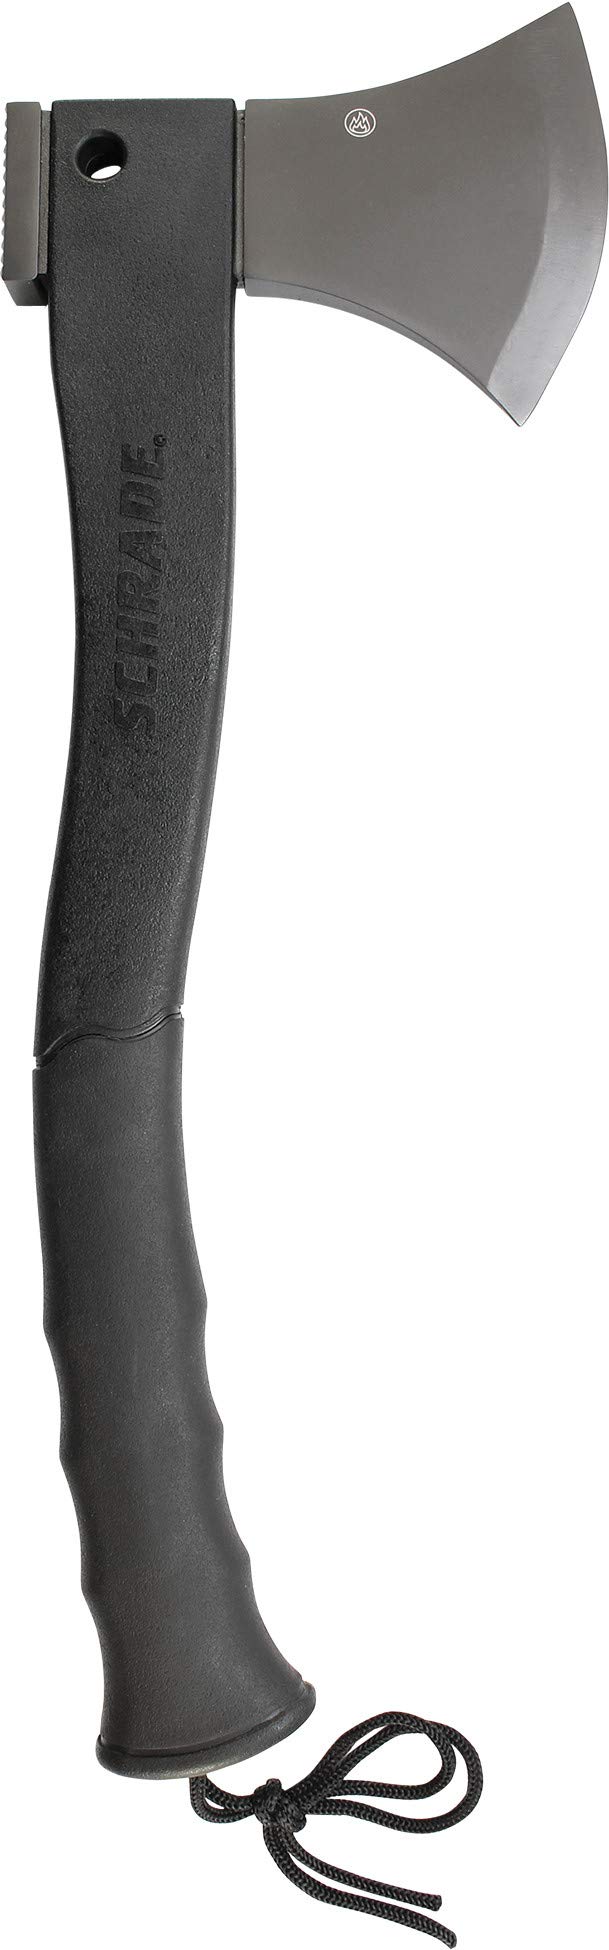 Schrade Outdoorbeil (Ab 18) Beile, Mehrfarbig, 39.5 cm